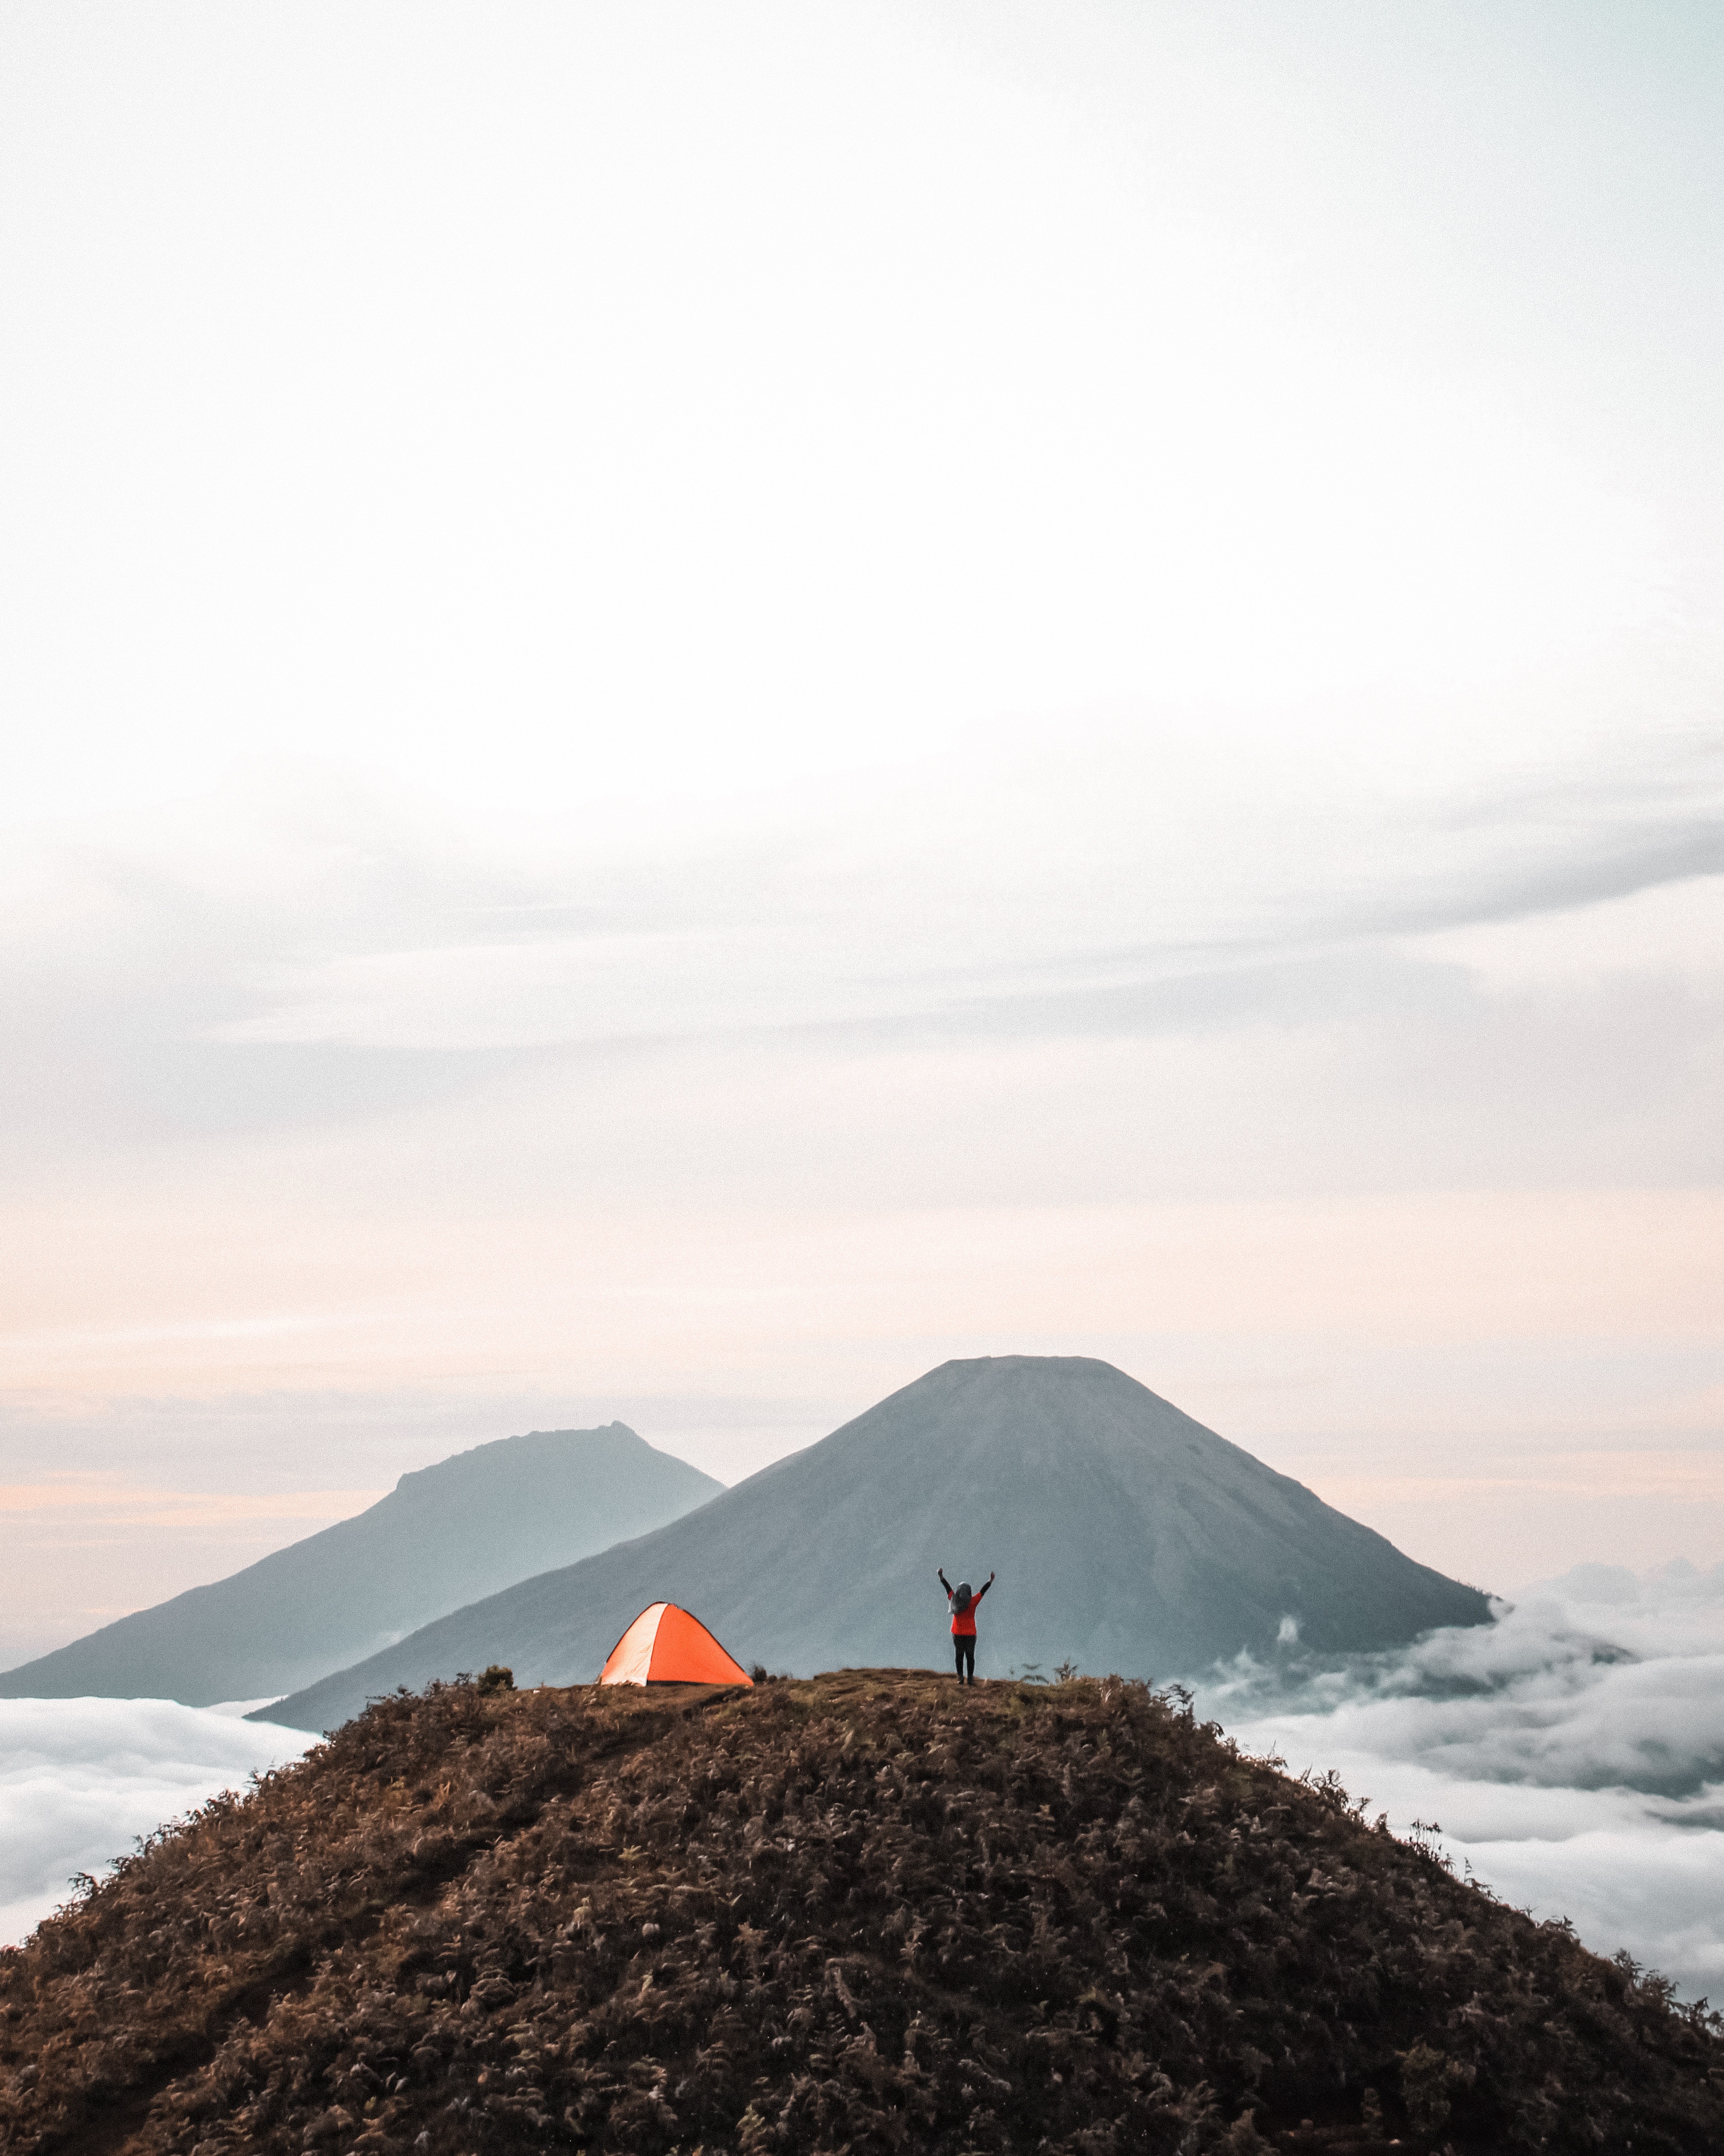 campsite, nature, mountains, human, person, tent, camping Desktop home screen Wallpaper